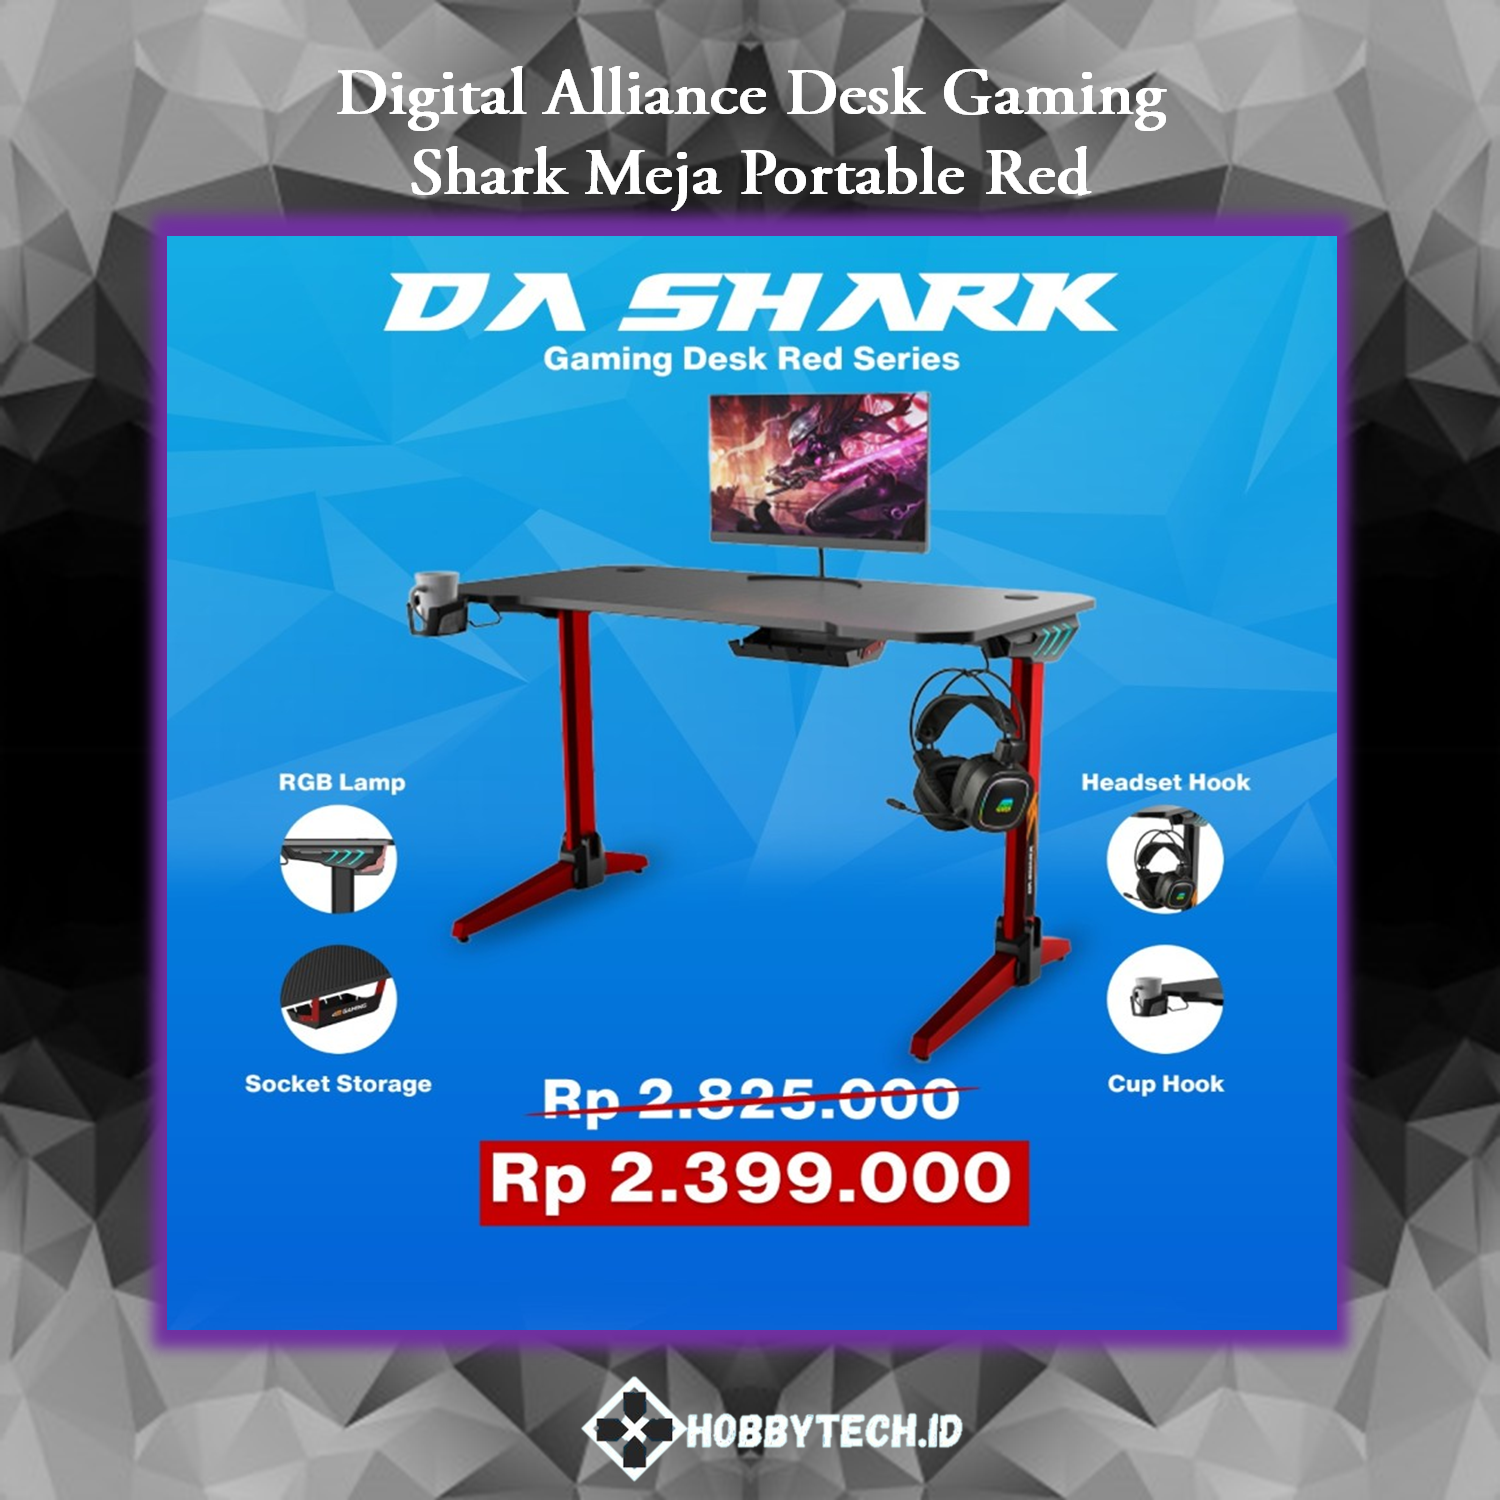 Digital Alliance Gaming Desk SHARK Meja Portable Red